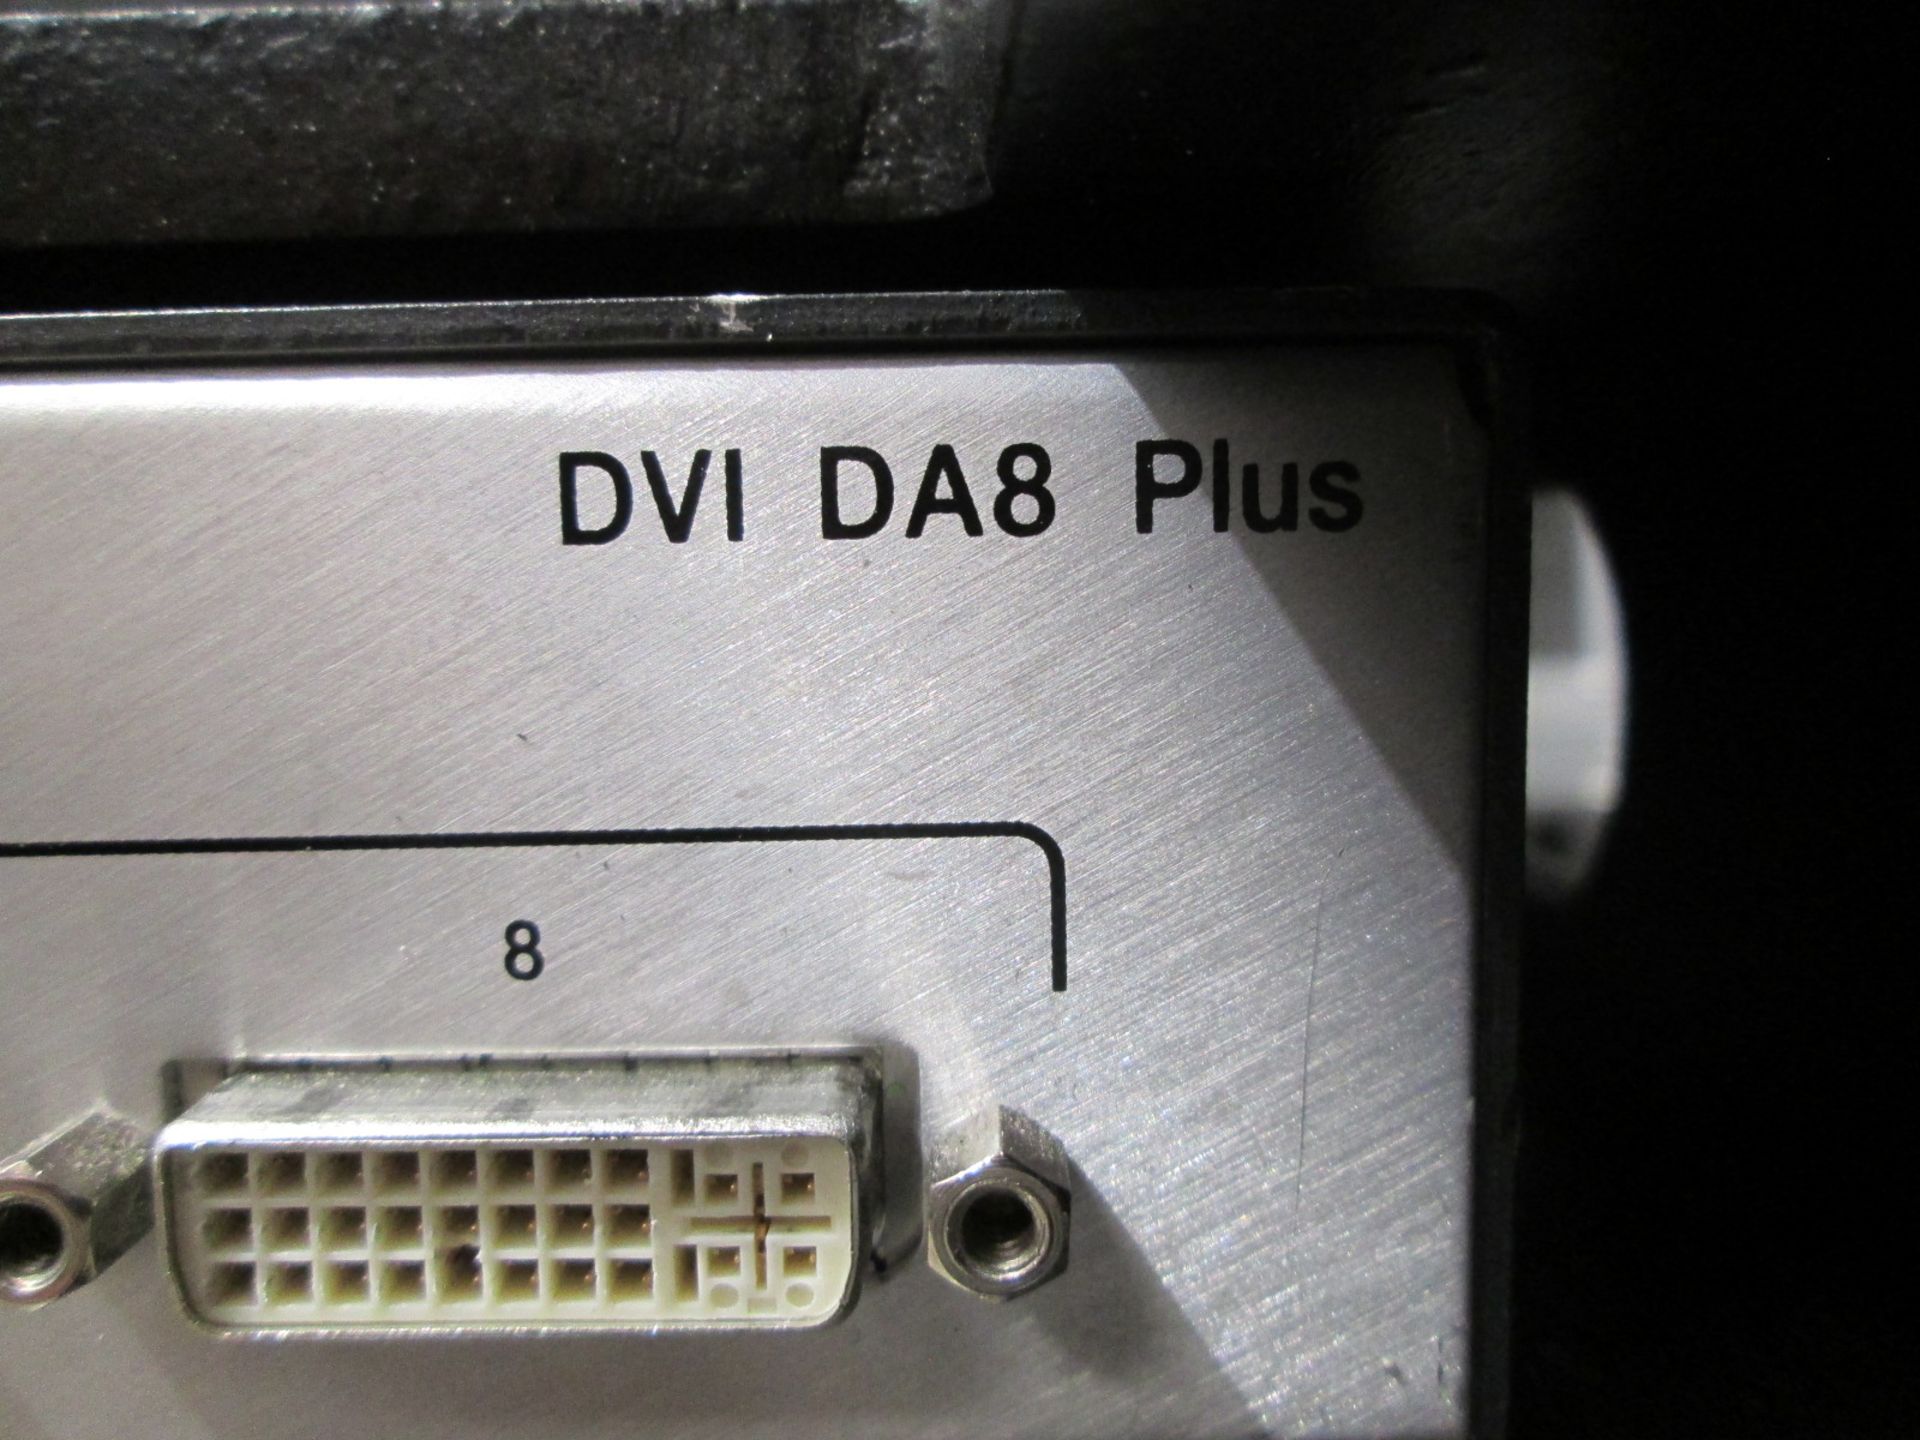 Extron DVI DA8 Plus 1:8 distribution Amplifers, In flight cases (Qty 4) - Image 5 of 5